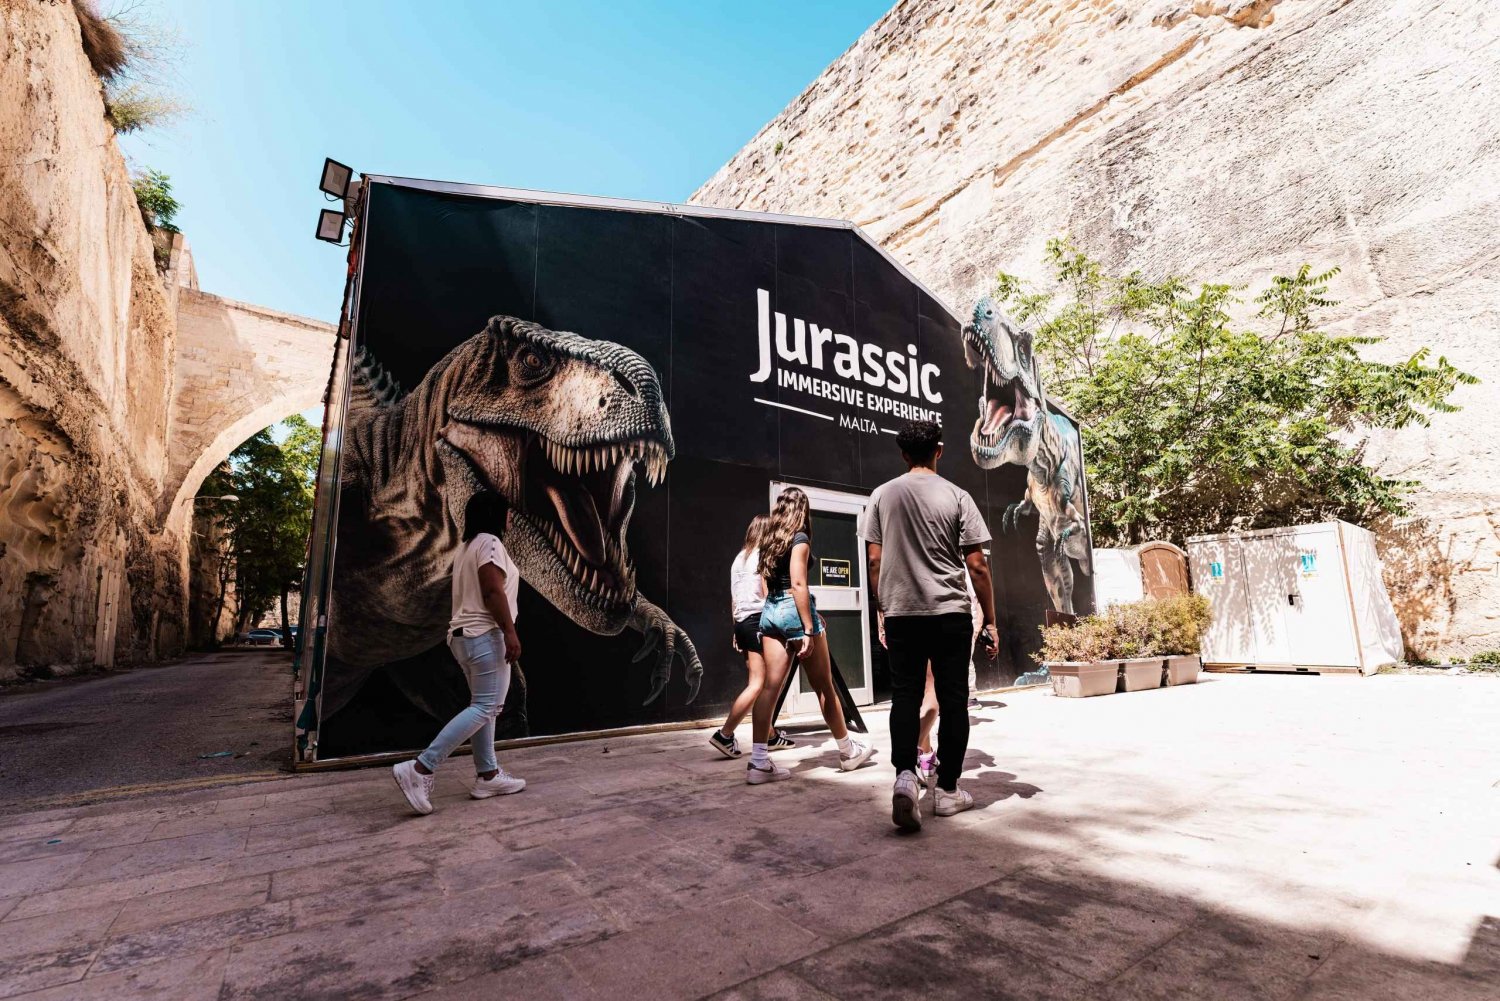 Jurassic - Immersive Experience in Malta